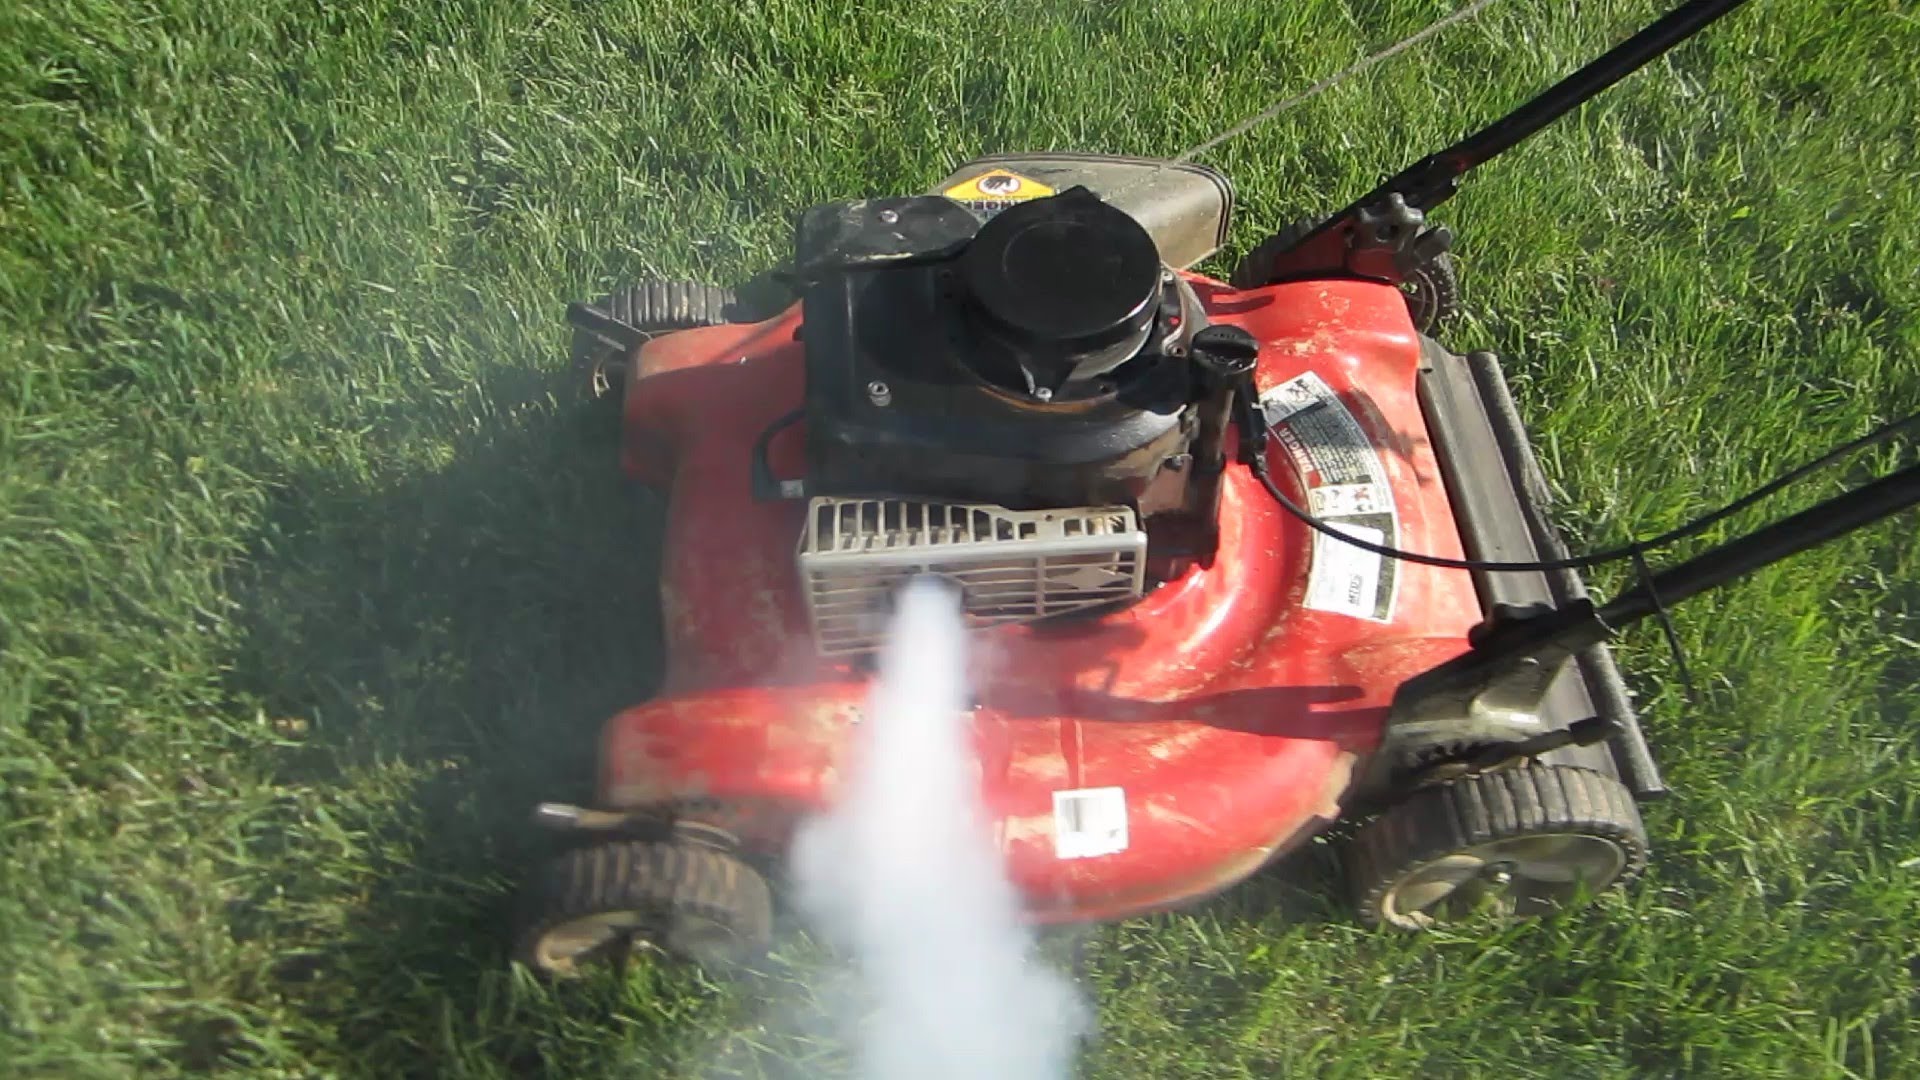 Yard Machines Lawn Mower Startup of Engine Swap -- It's Smoking ...